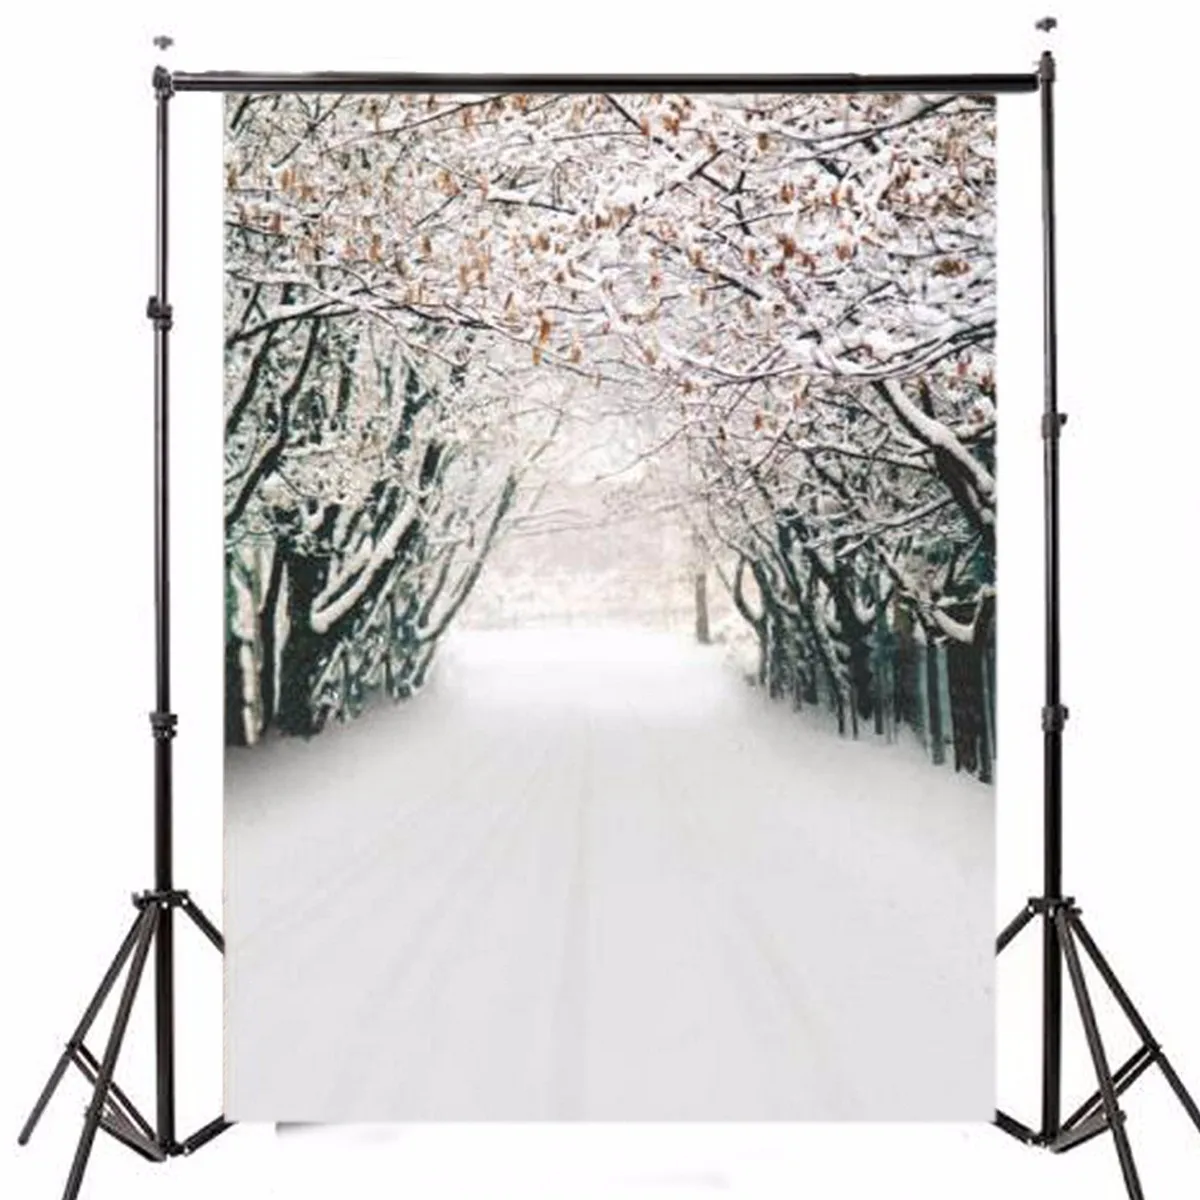 Freya 7x5FT покрытый снегом лес фон для студийной фотосъемки вечерние фото-съемки пол сзади капли Фотофон комплект 2,1x1,5 м